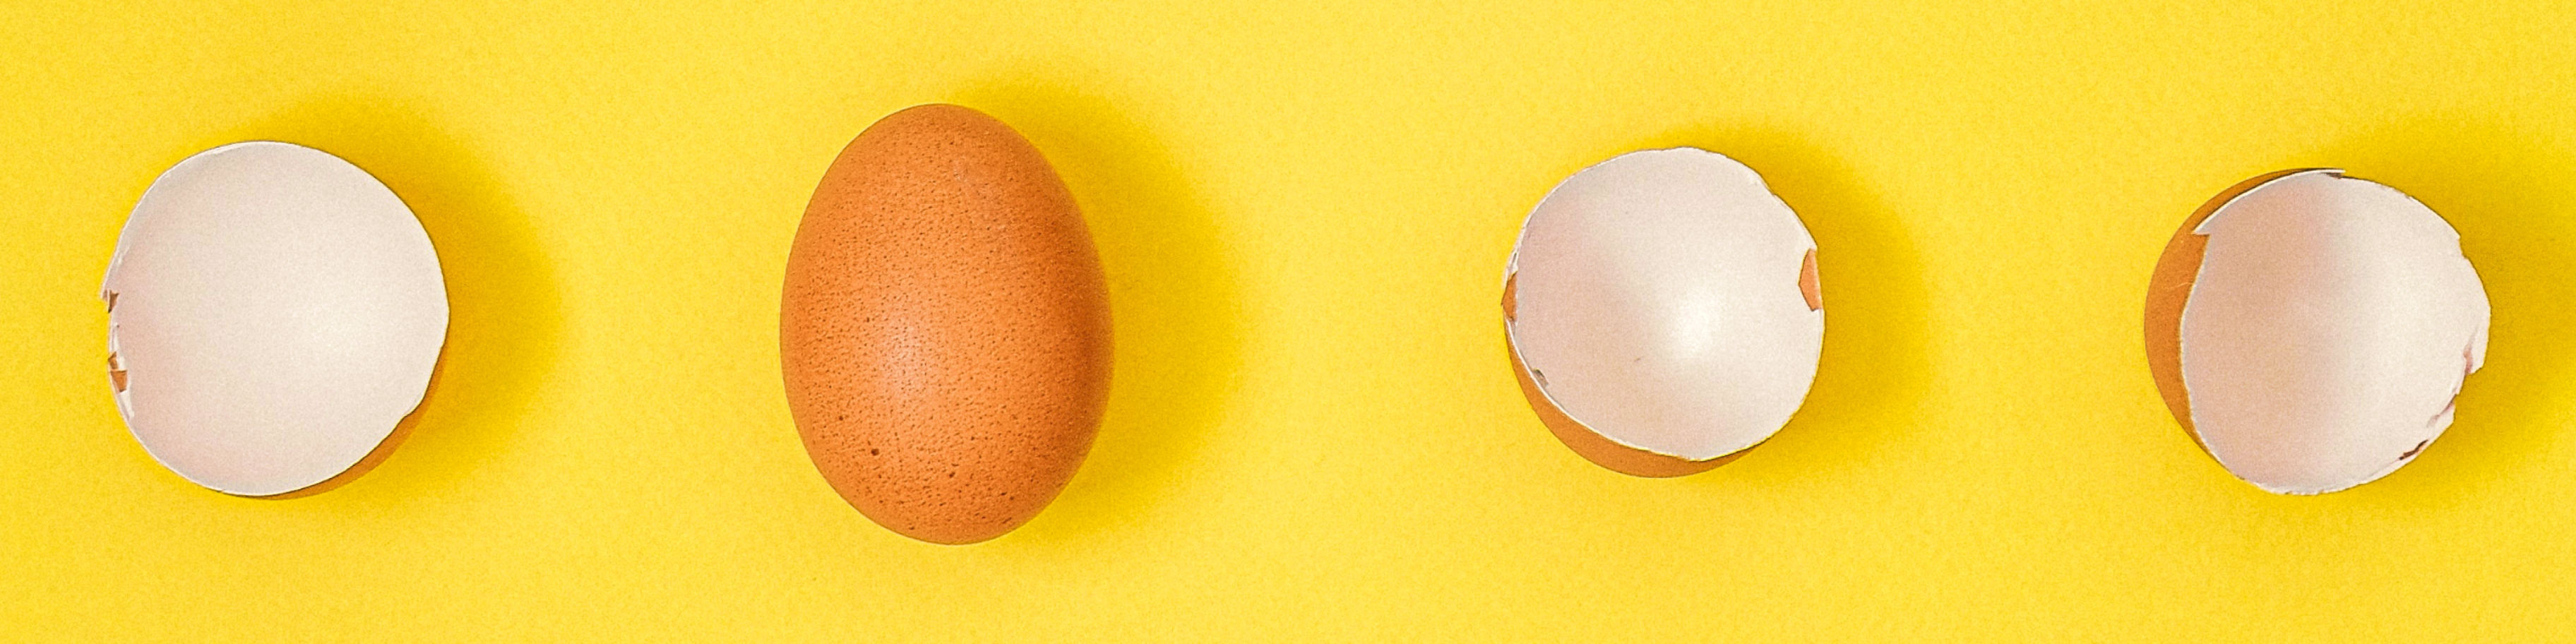 Egg shells representing pregnancy.